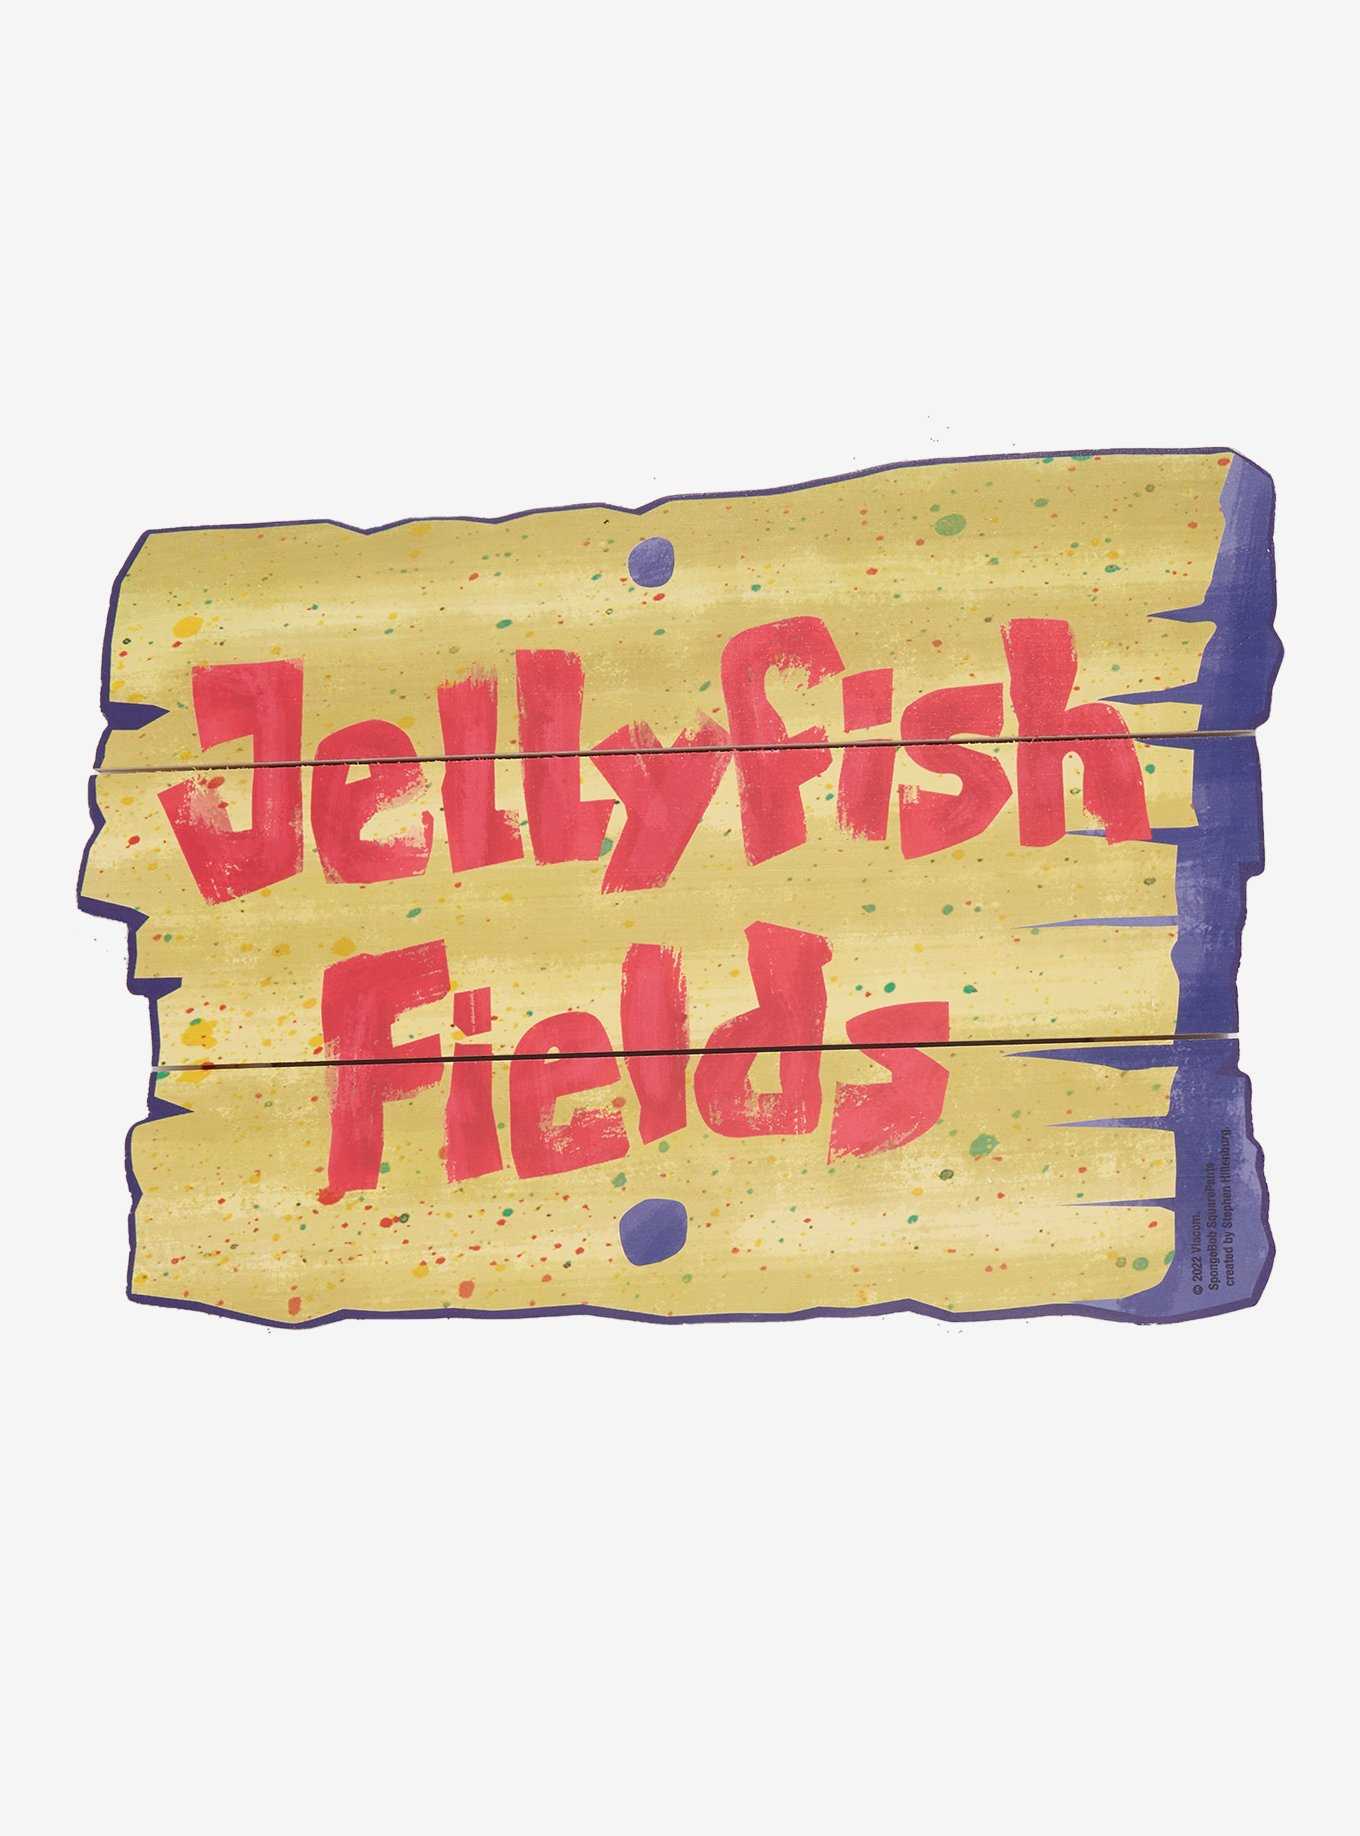 SpongeBob SquarePants Jellyfish Fields Wall Art, , hi-res